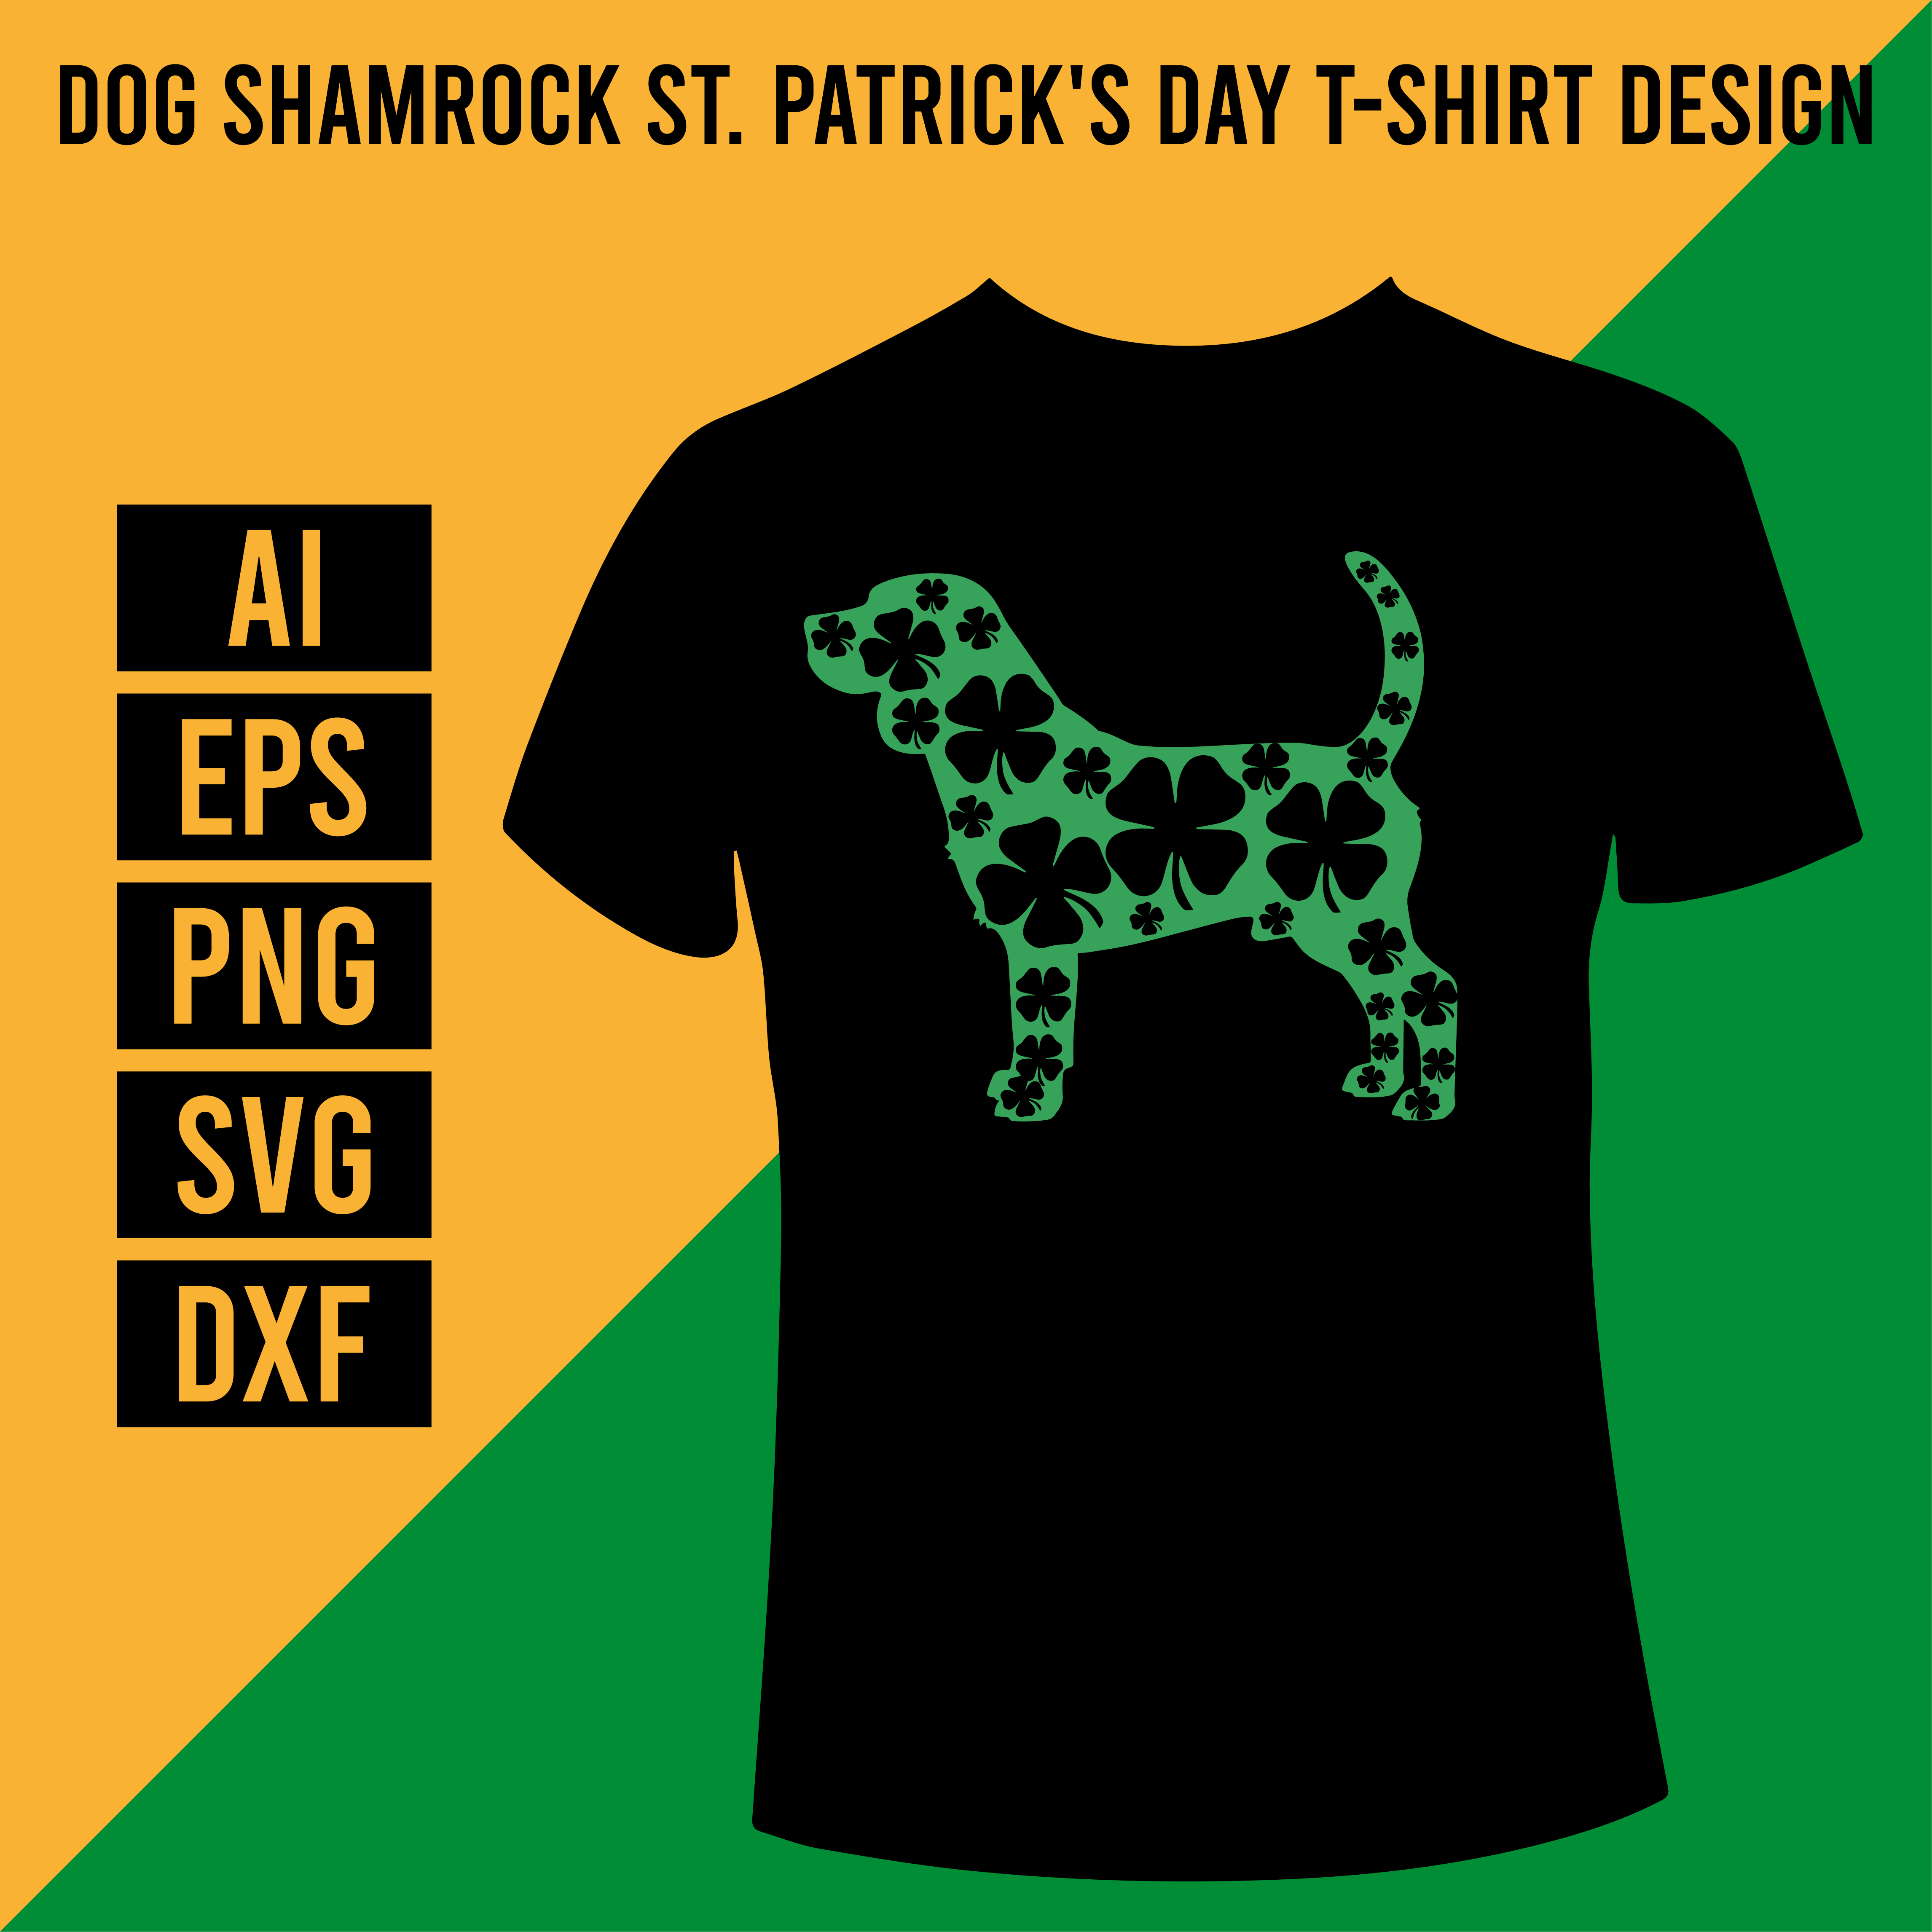 Dog Shamrock St Patrick's Day T-Shirt Design cover image.